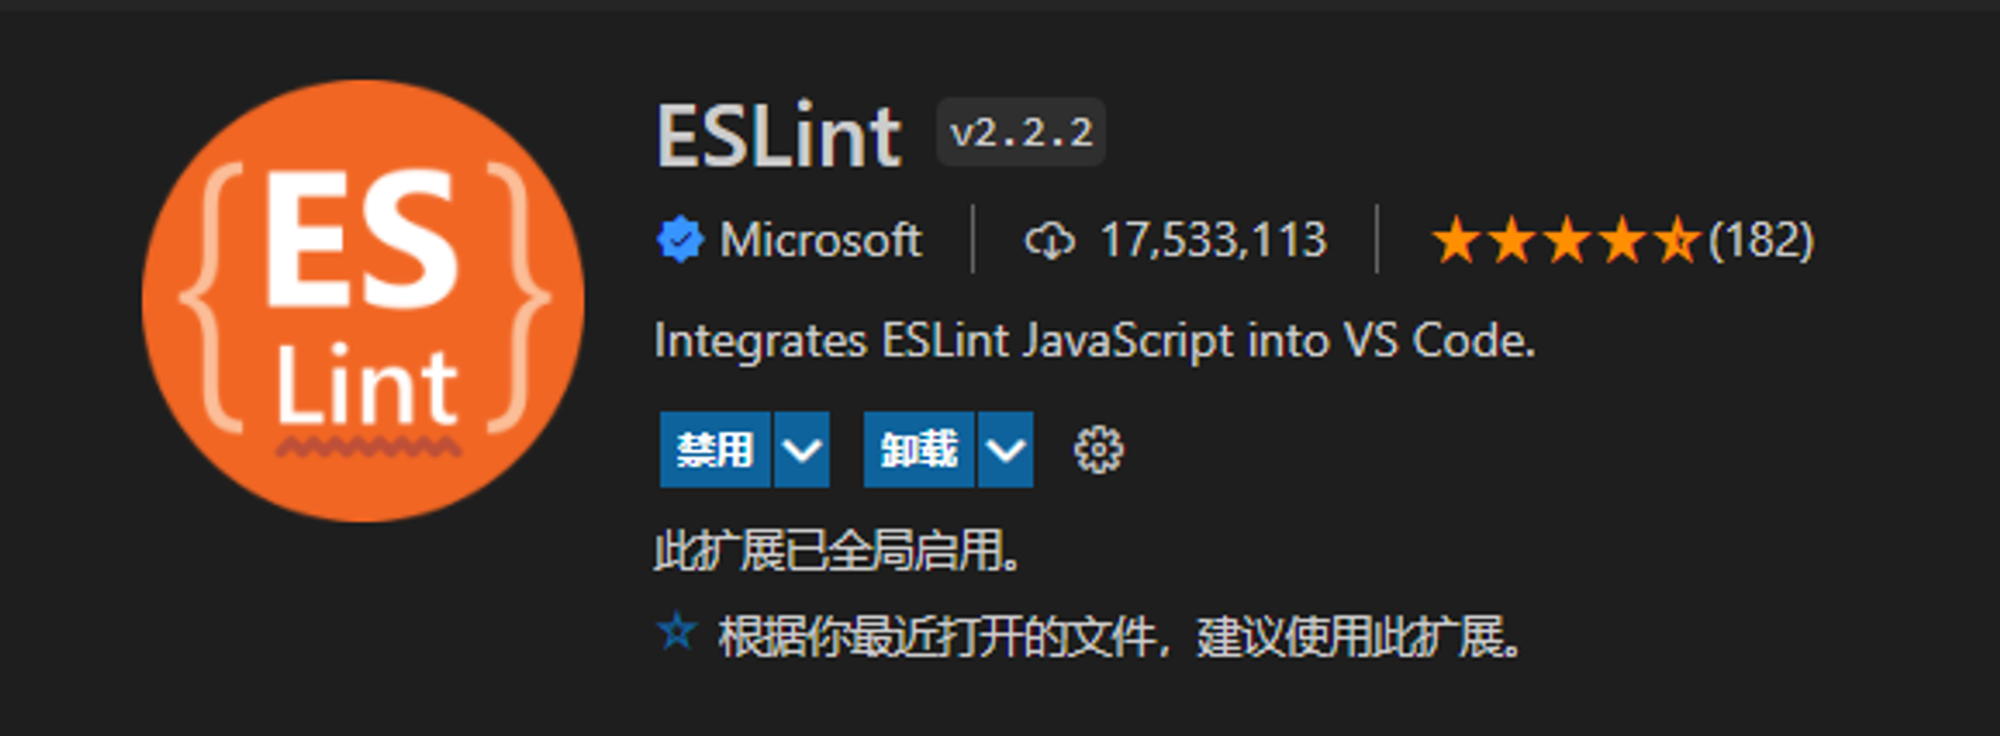 VSCode保存文件时自动按照ESLint格式化代码